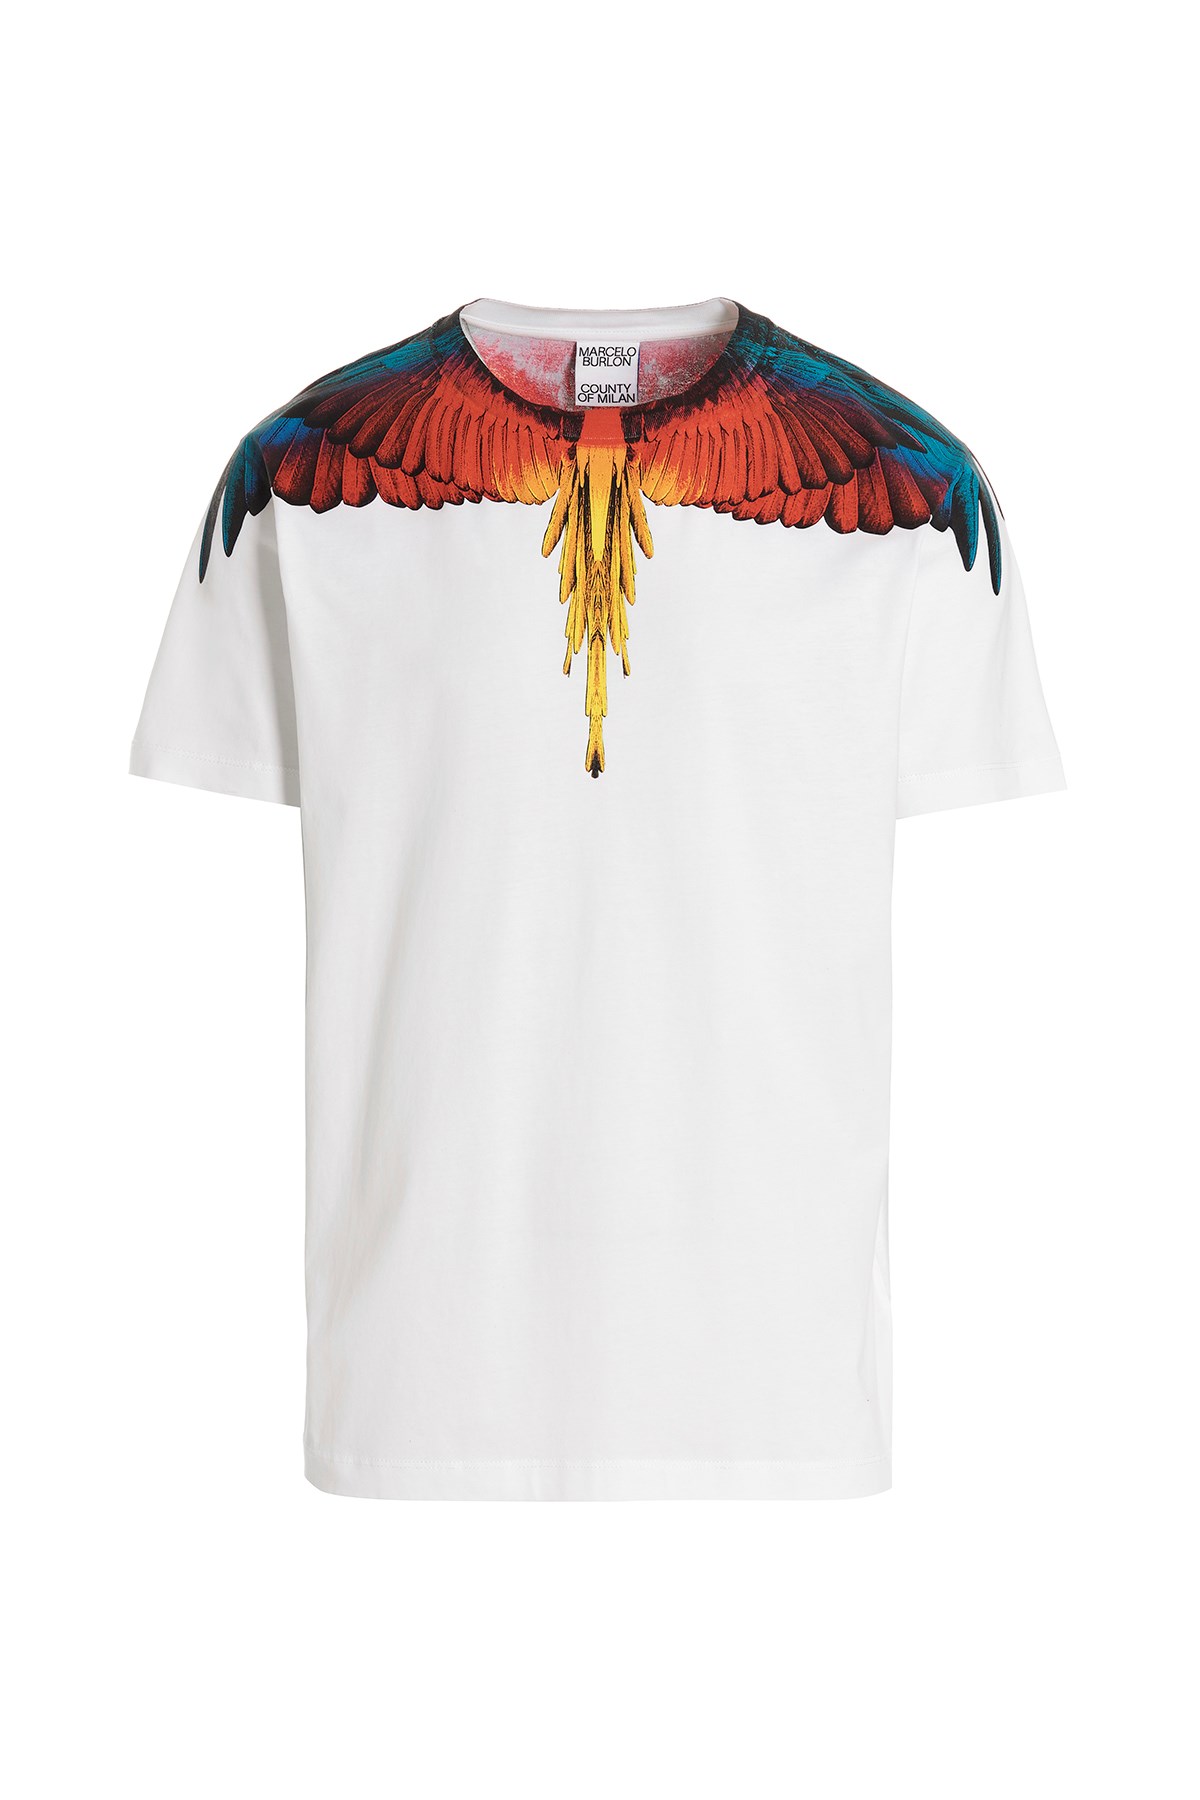 MARCELO BURLON - COUNTY OF MILAN T-Shirt 'Icon Wings'